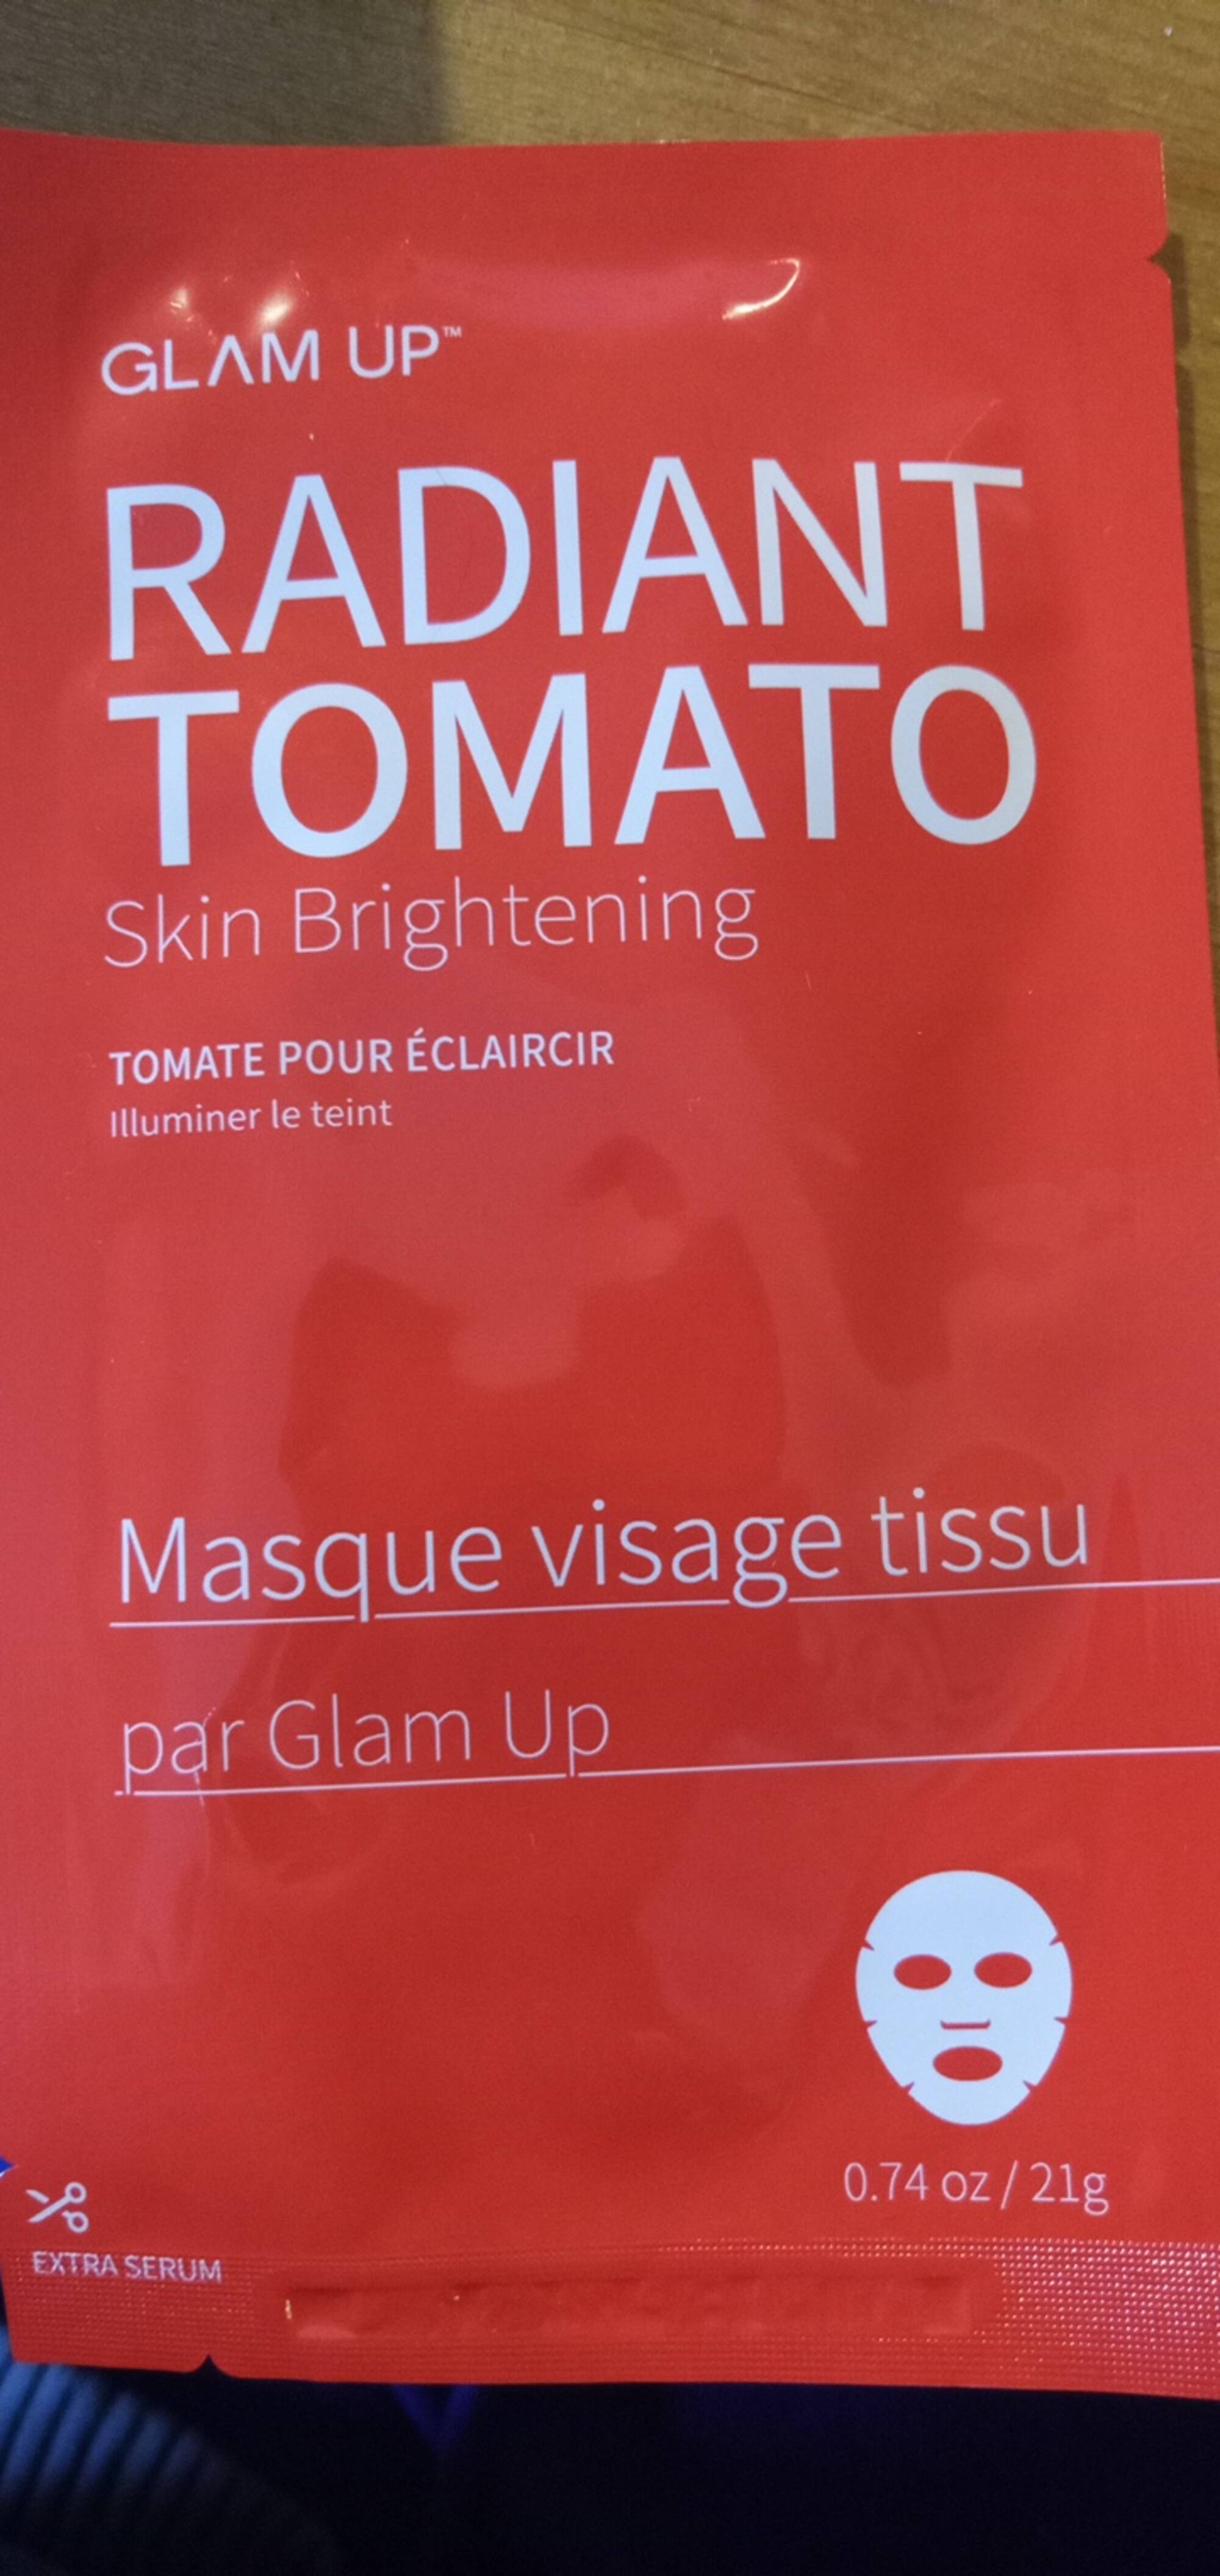 GLAM'UP - Radiant tomato - Masque visage tissu